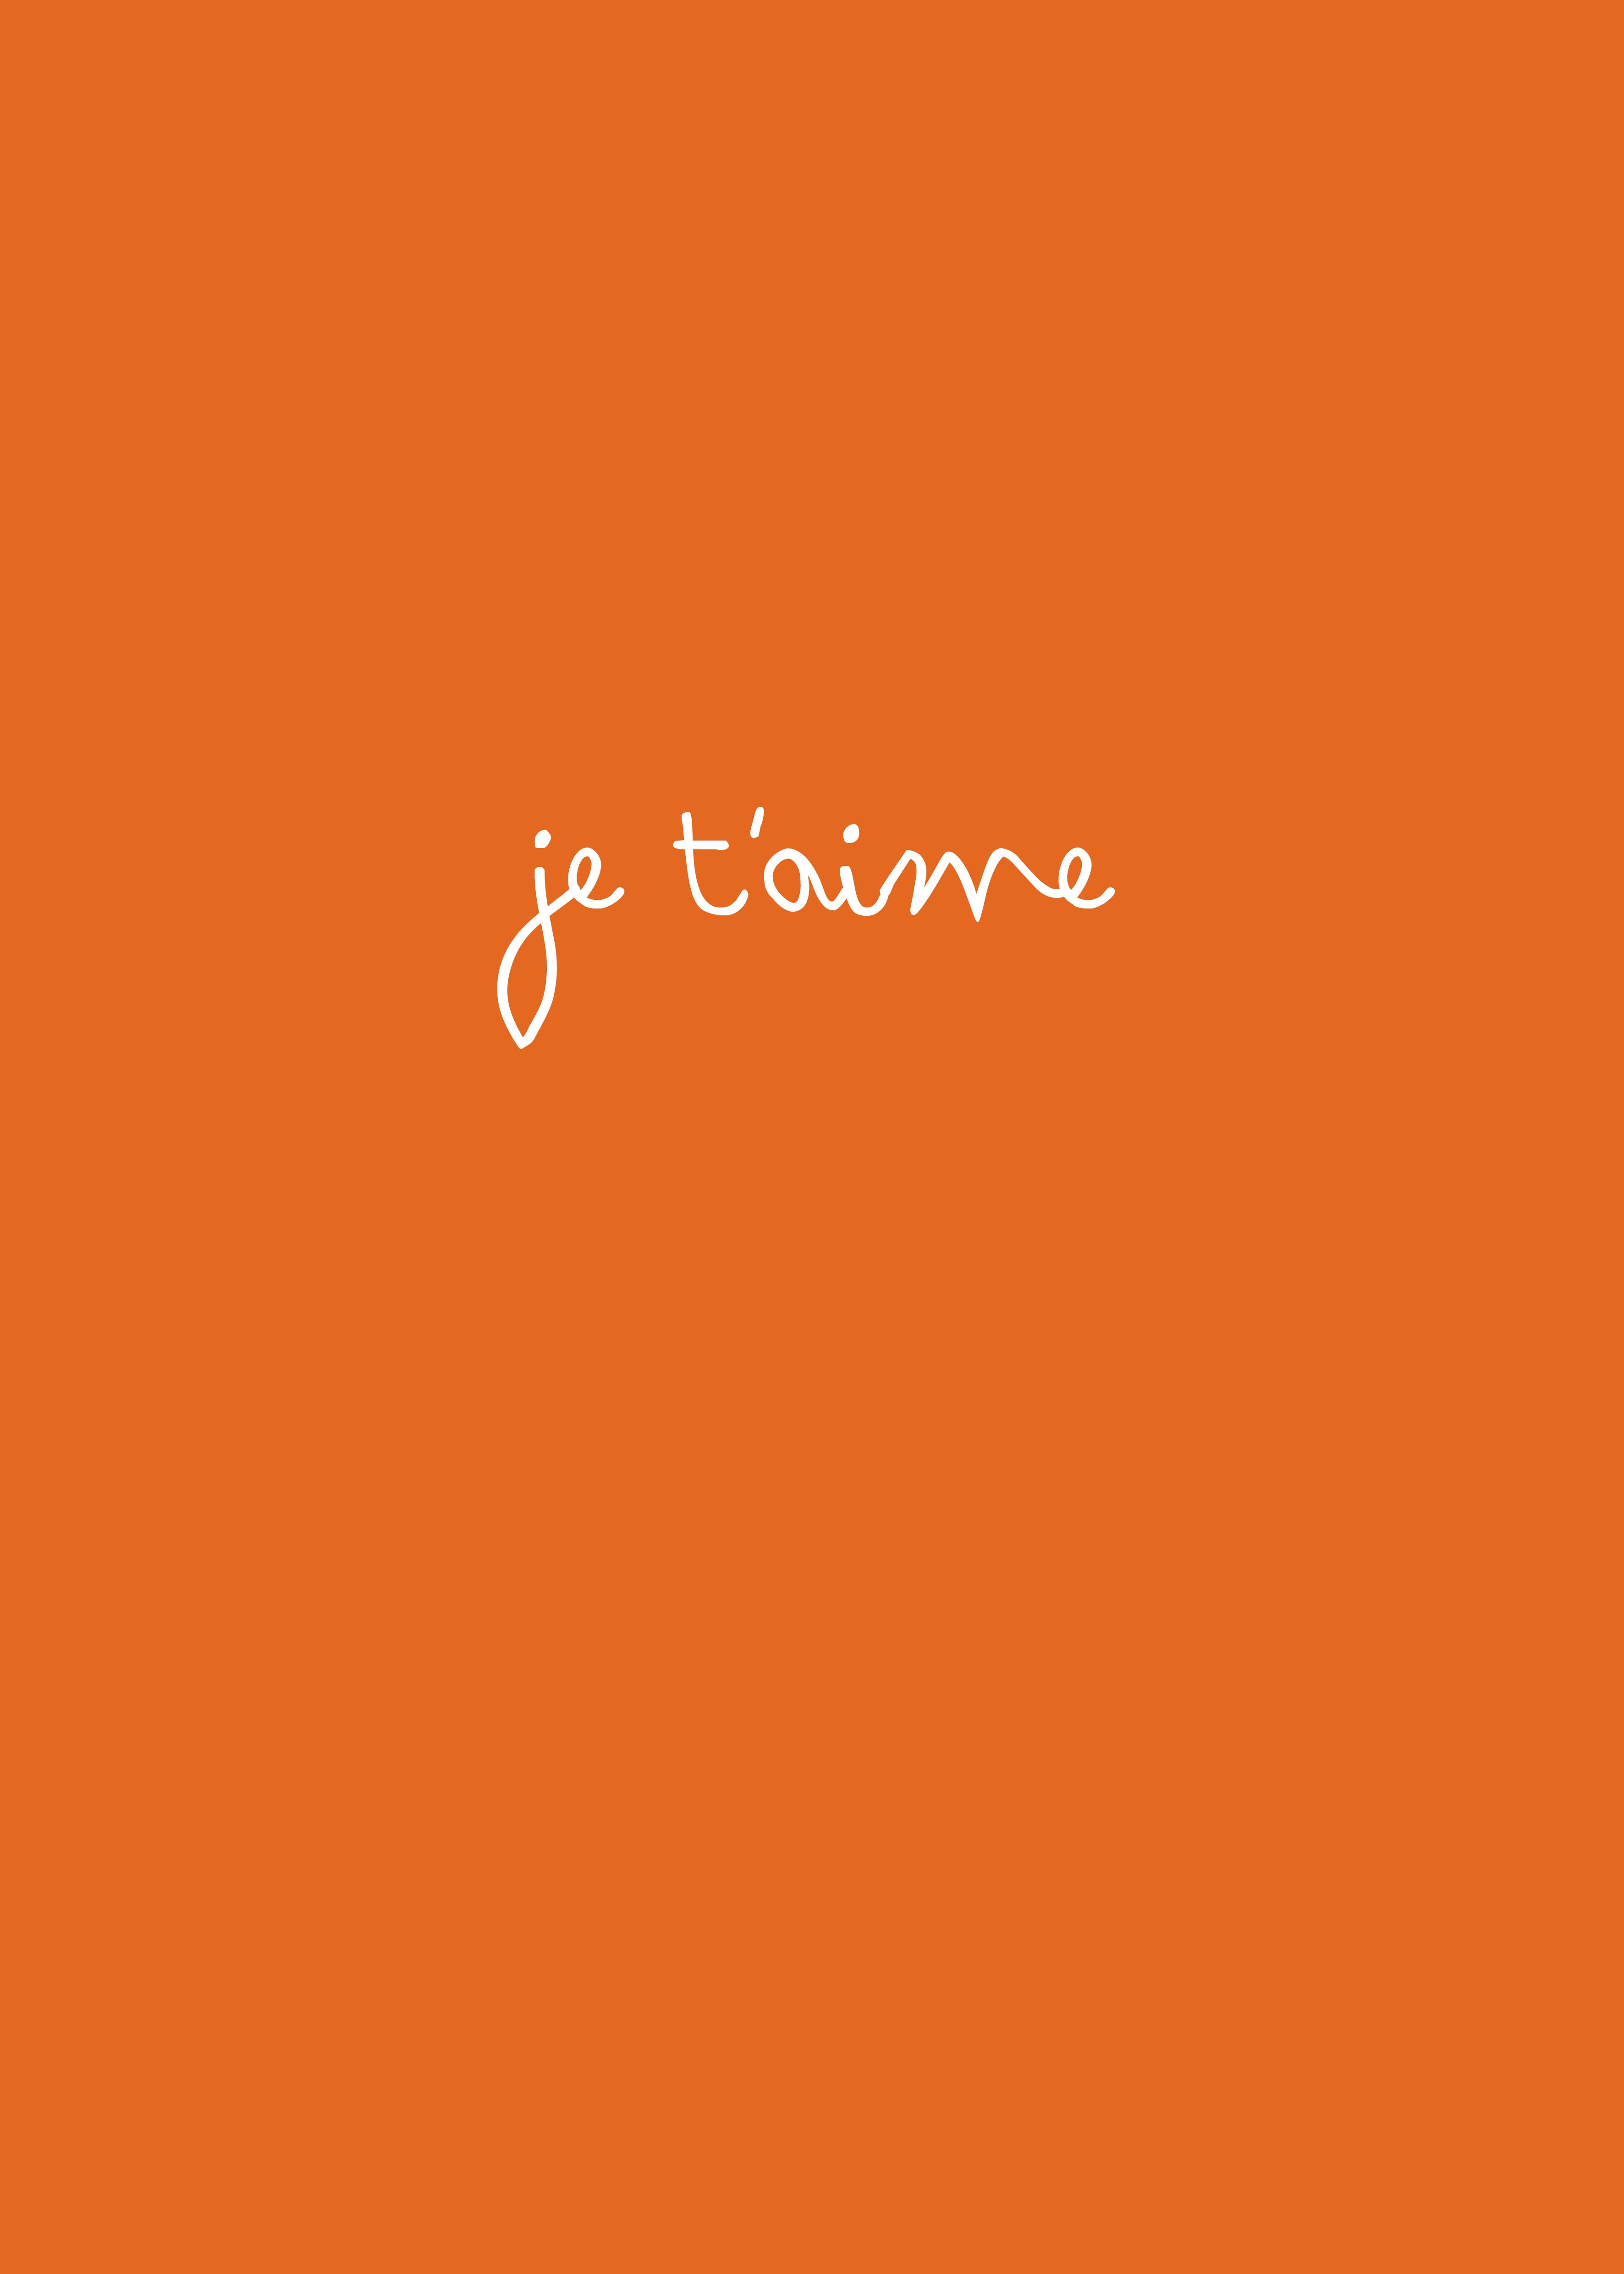 An orange background with the words je t'aime written in white - Orange, neon orange, pastel orange